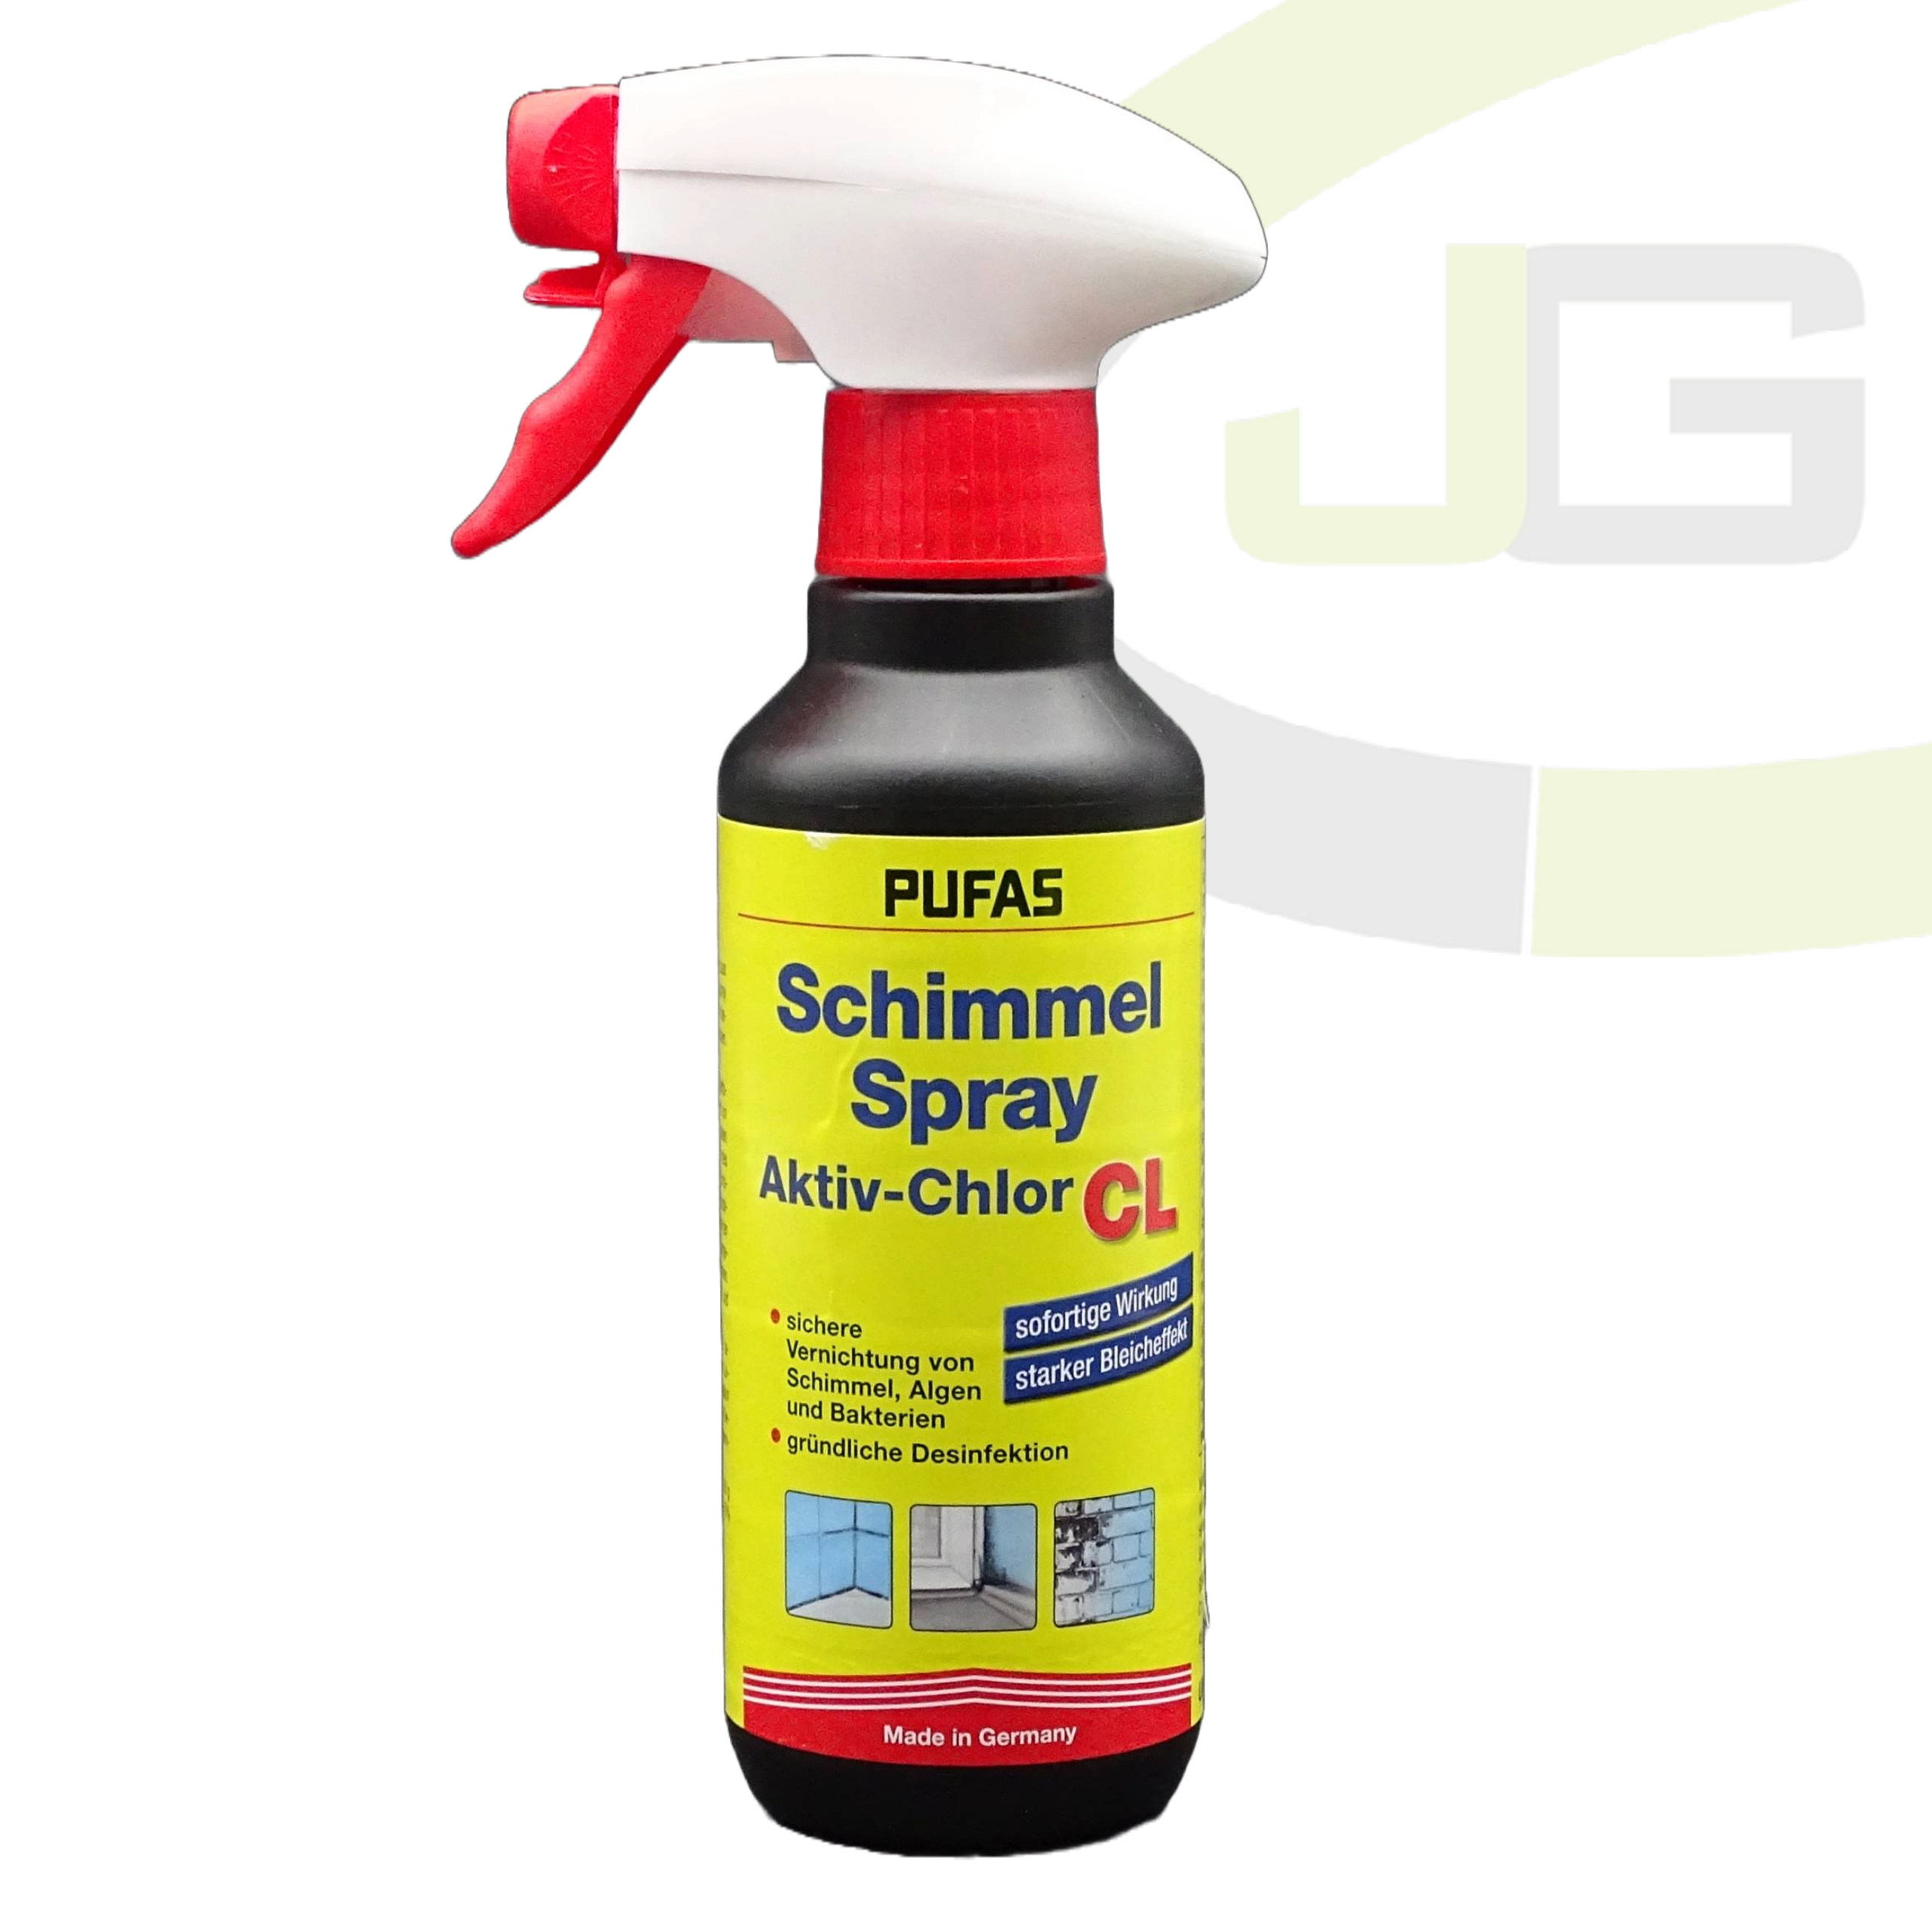 Pufas Schimmel-Sprayl Aktiv-Chlor CL - 250 ml